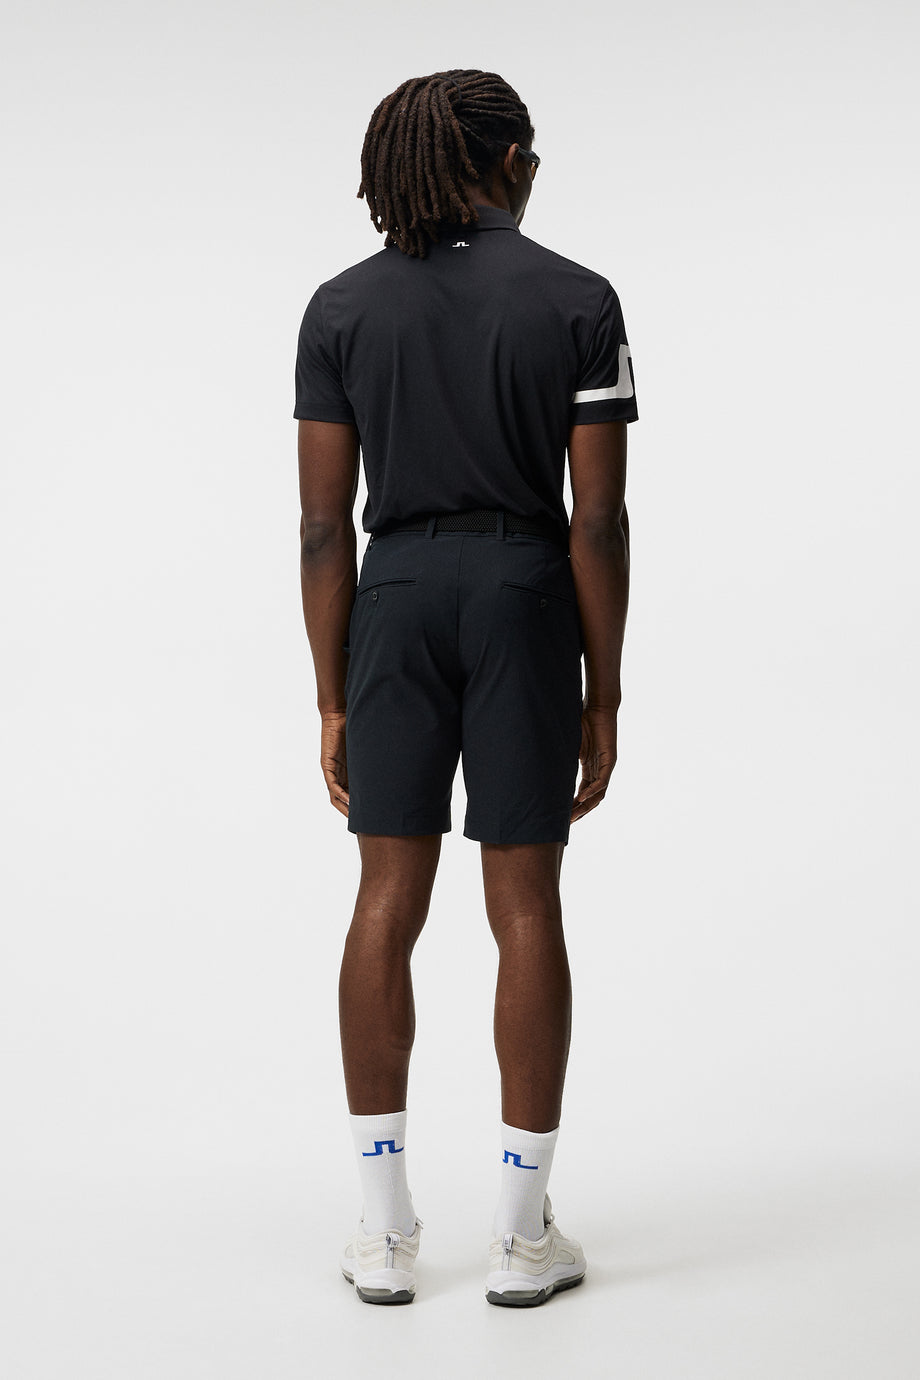 Vent Tight Golf Shorts / Black